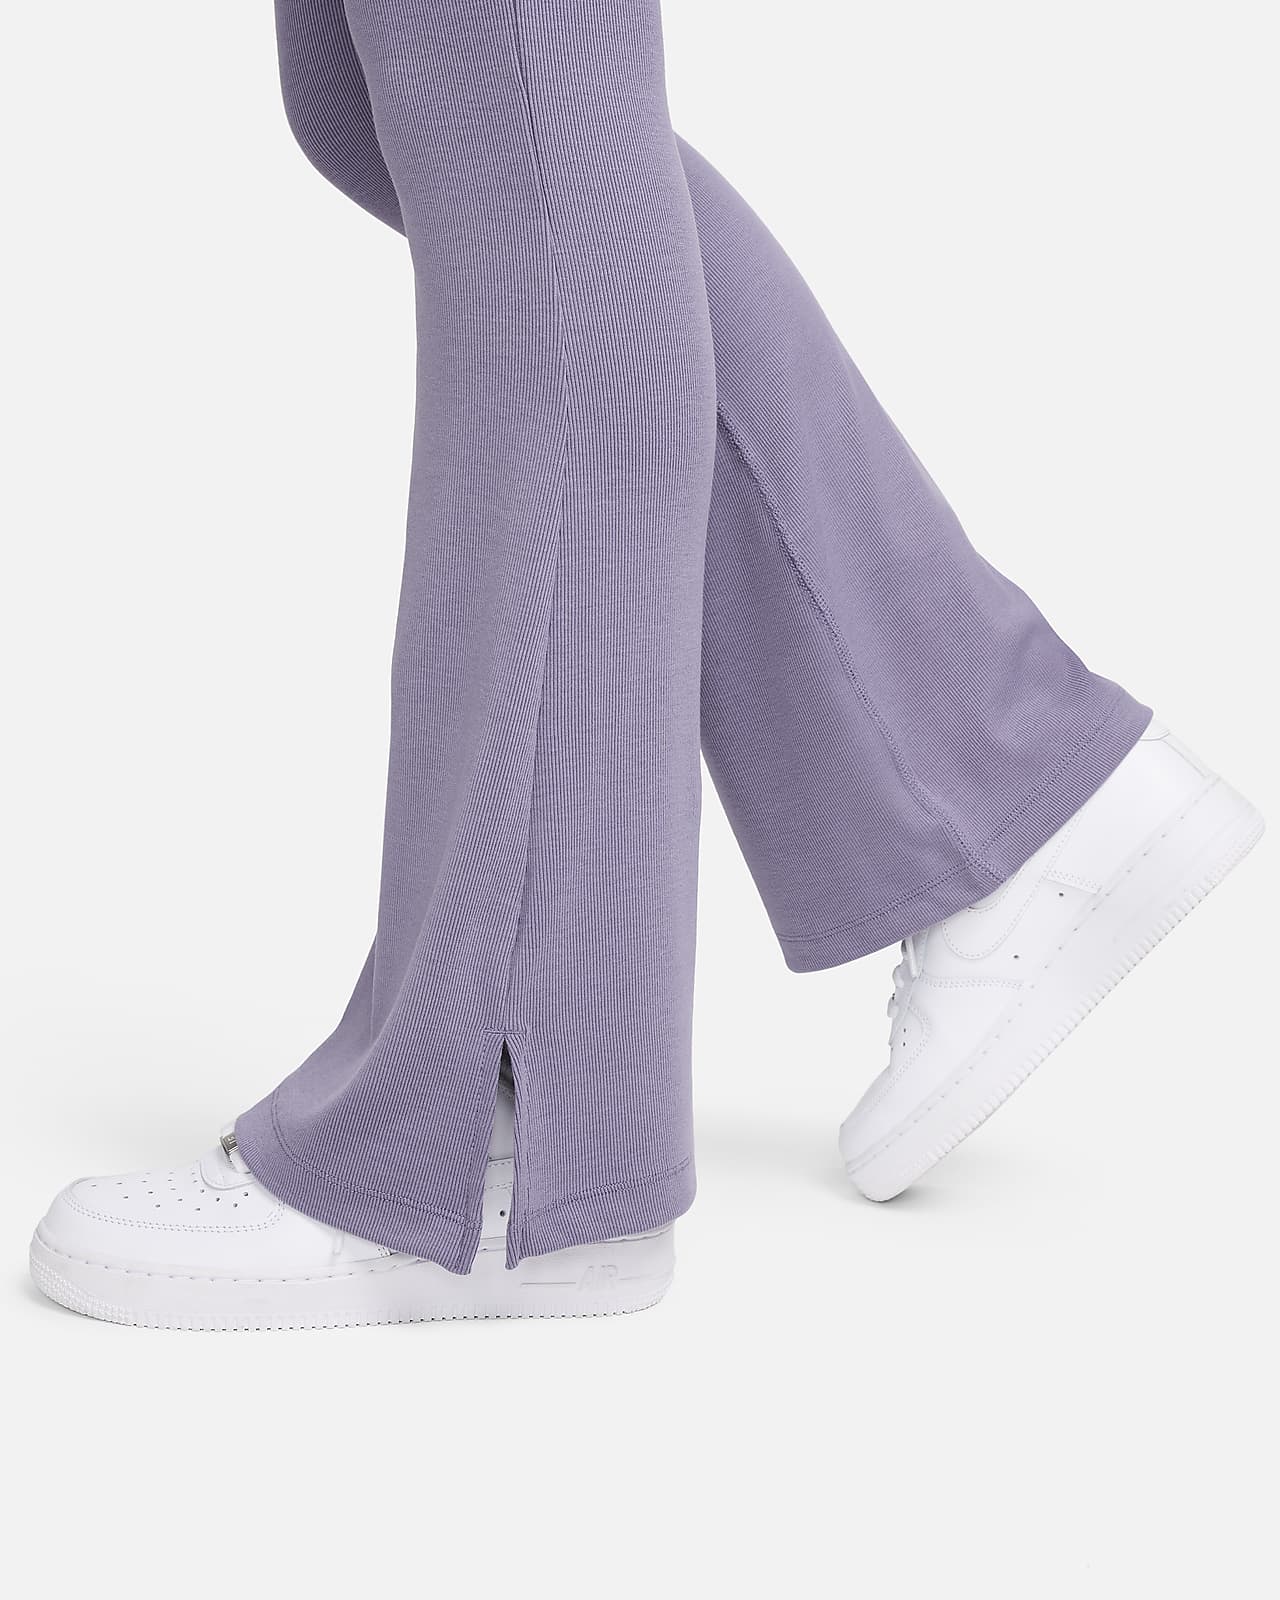 NWT Women's Nike Sportswear Club Leggings Tight Fit Gray Swoosh AH3362-063  XS